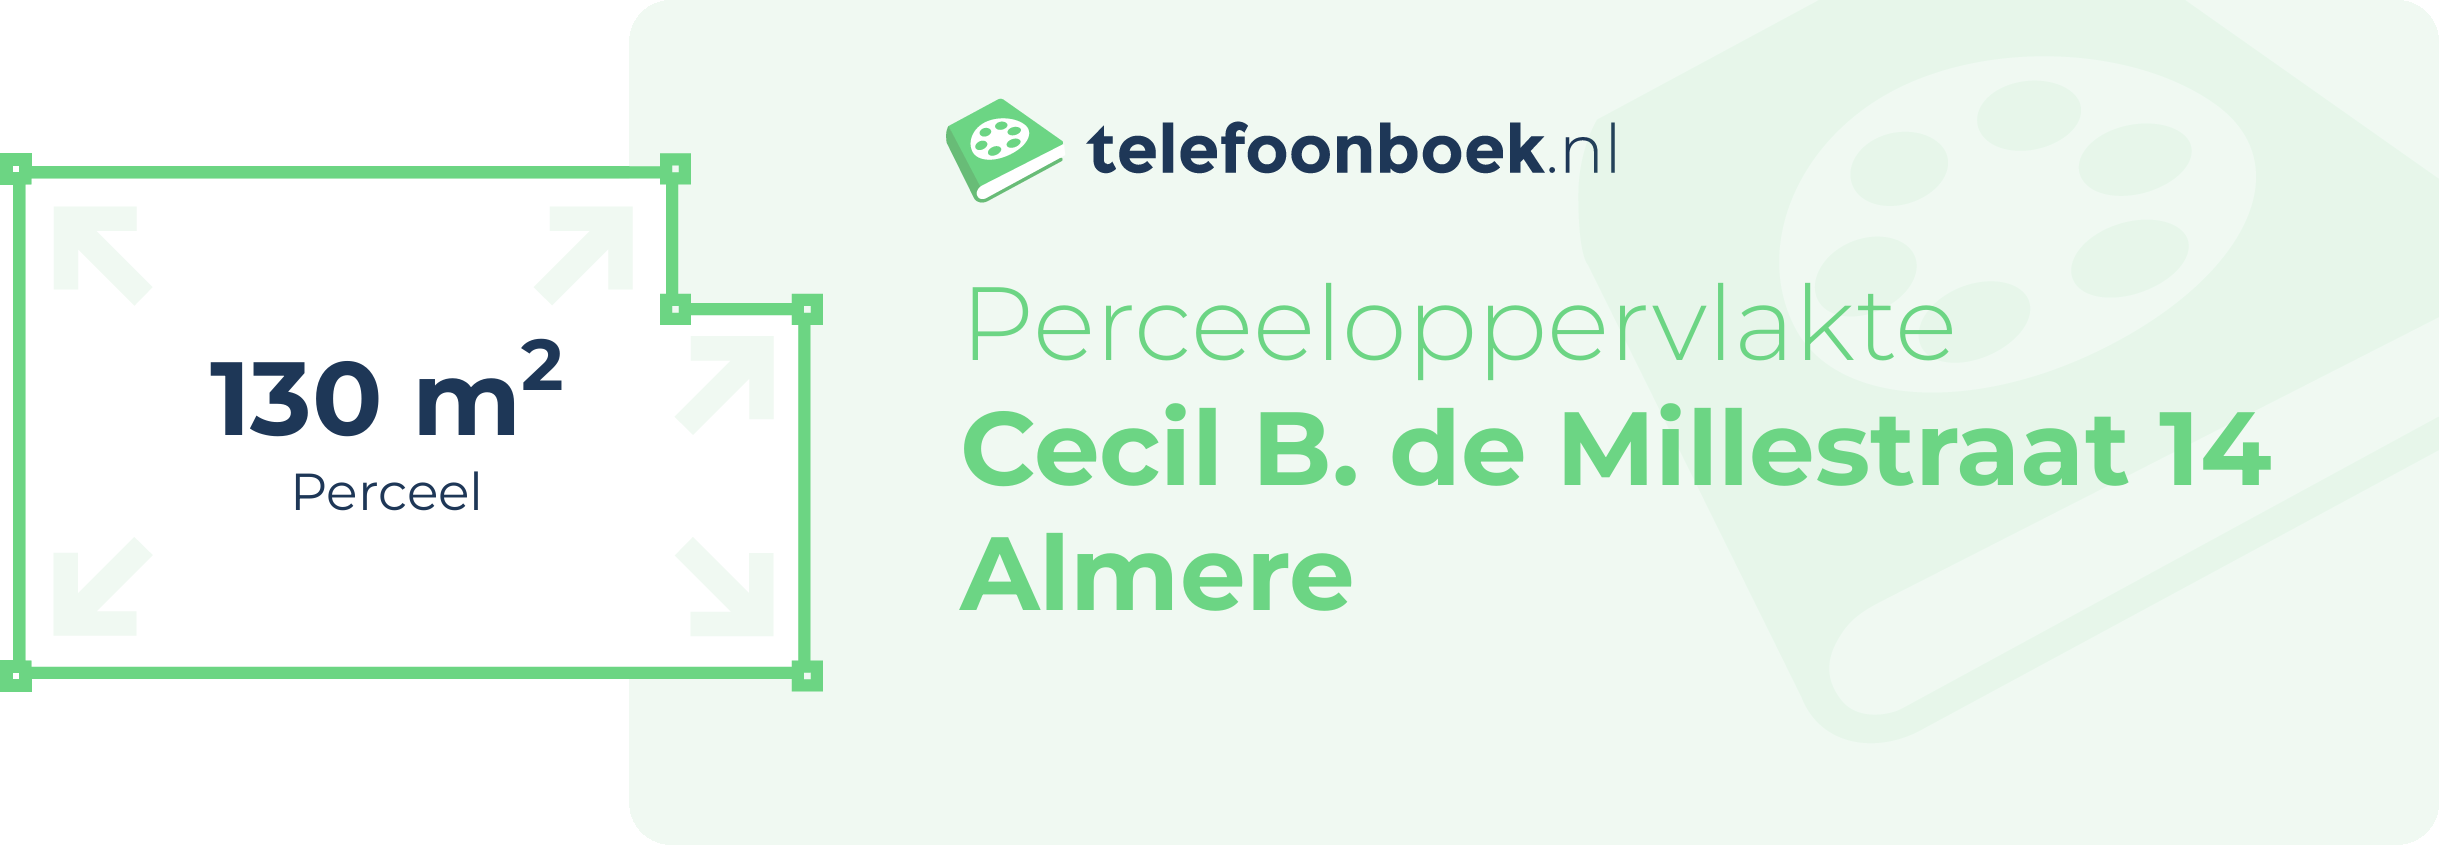 Perceeloppervlakte Cecil B. De Millestraat 14 Almere